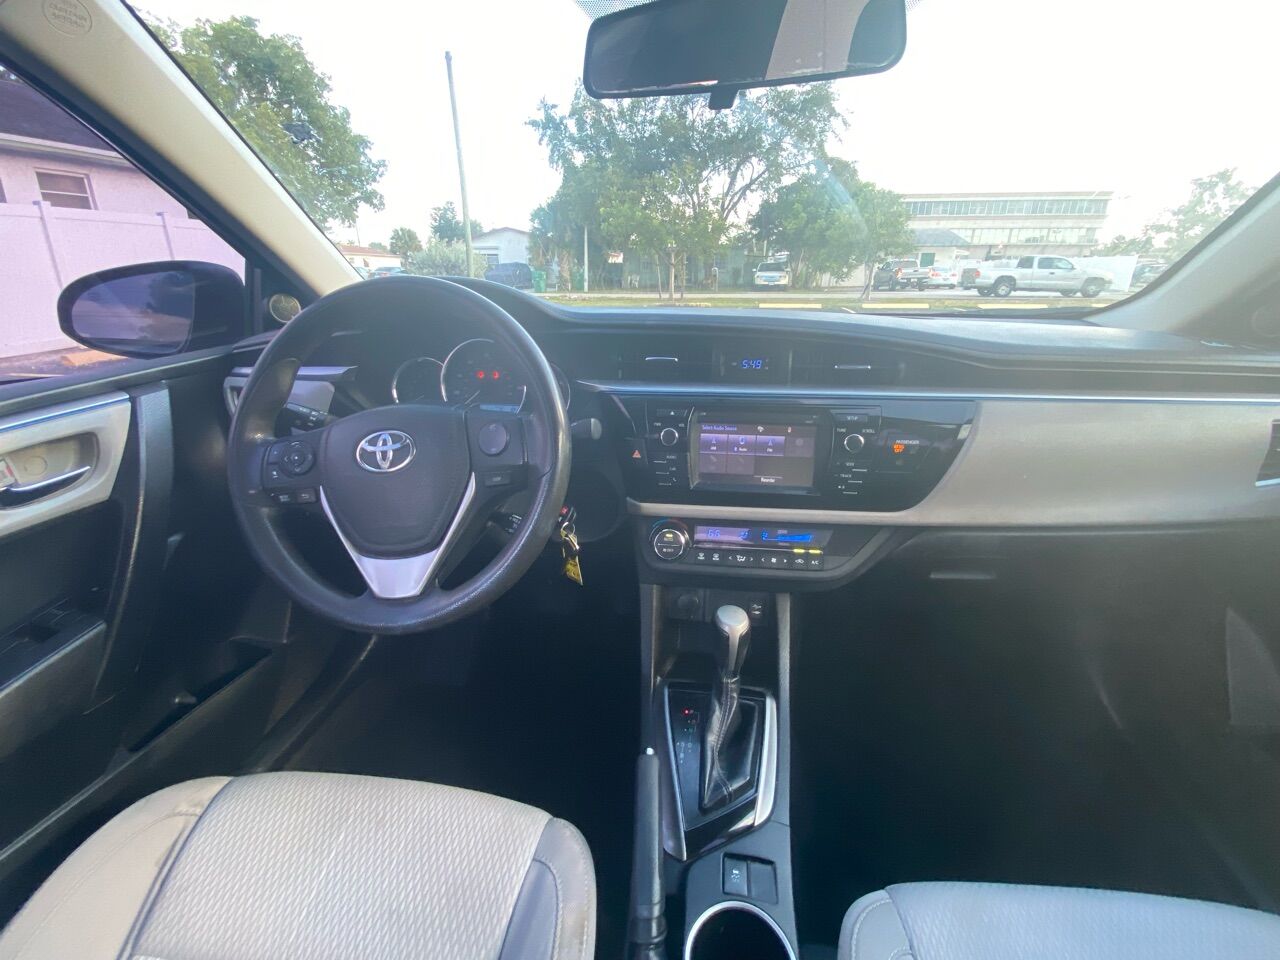 2016 Toyota Corolla Sedan - $14,900